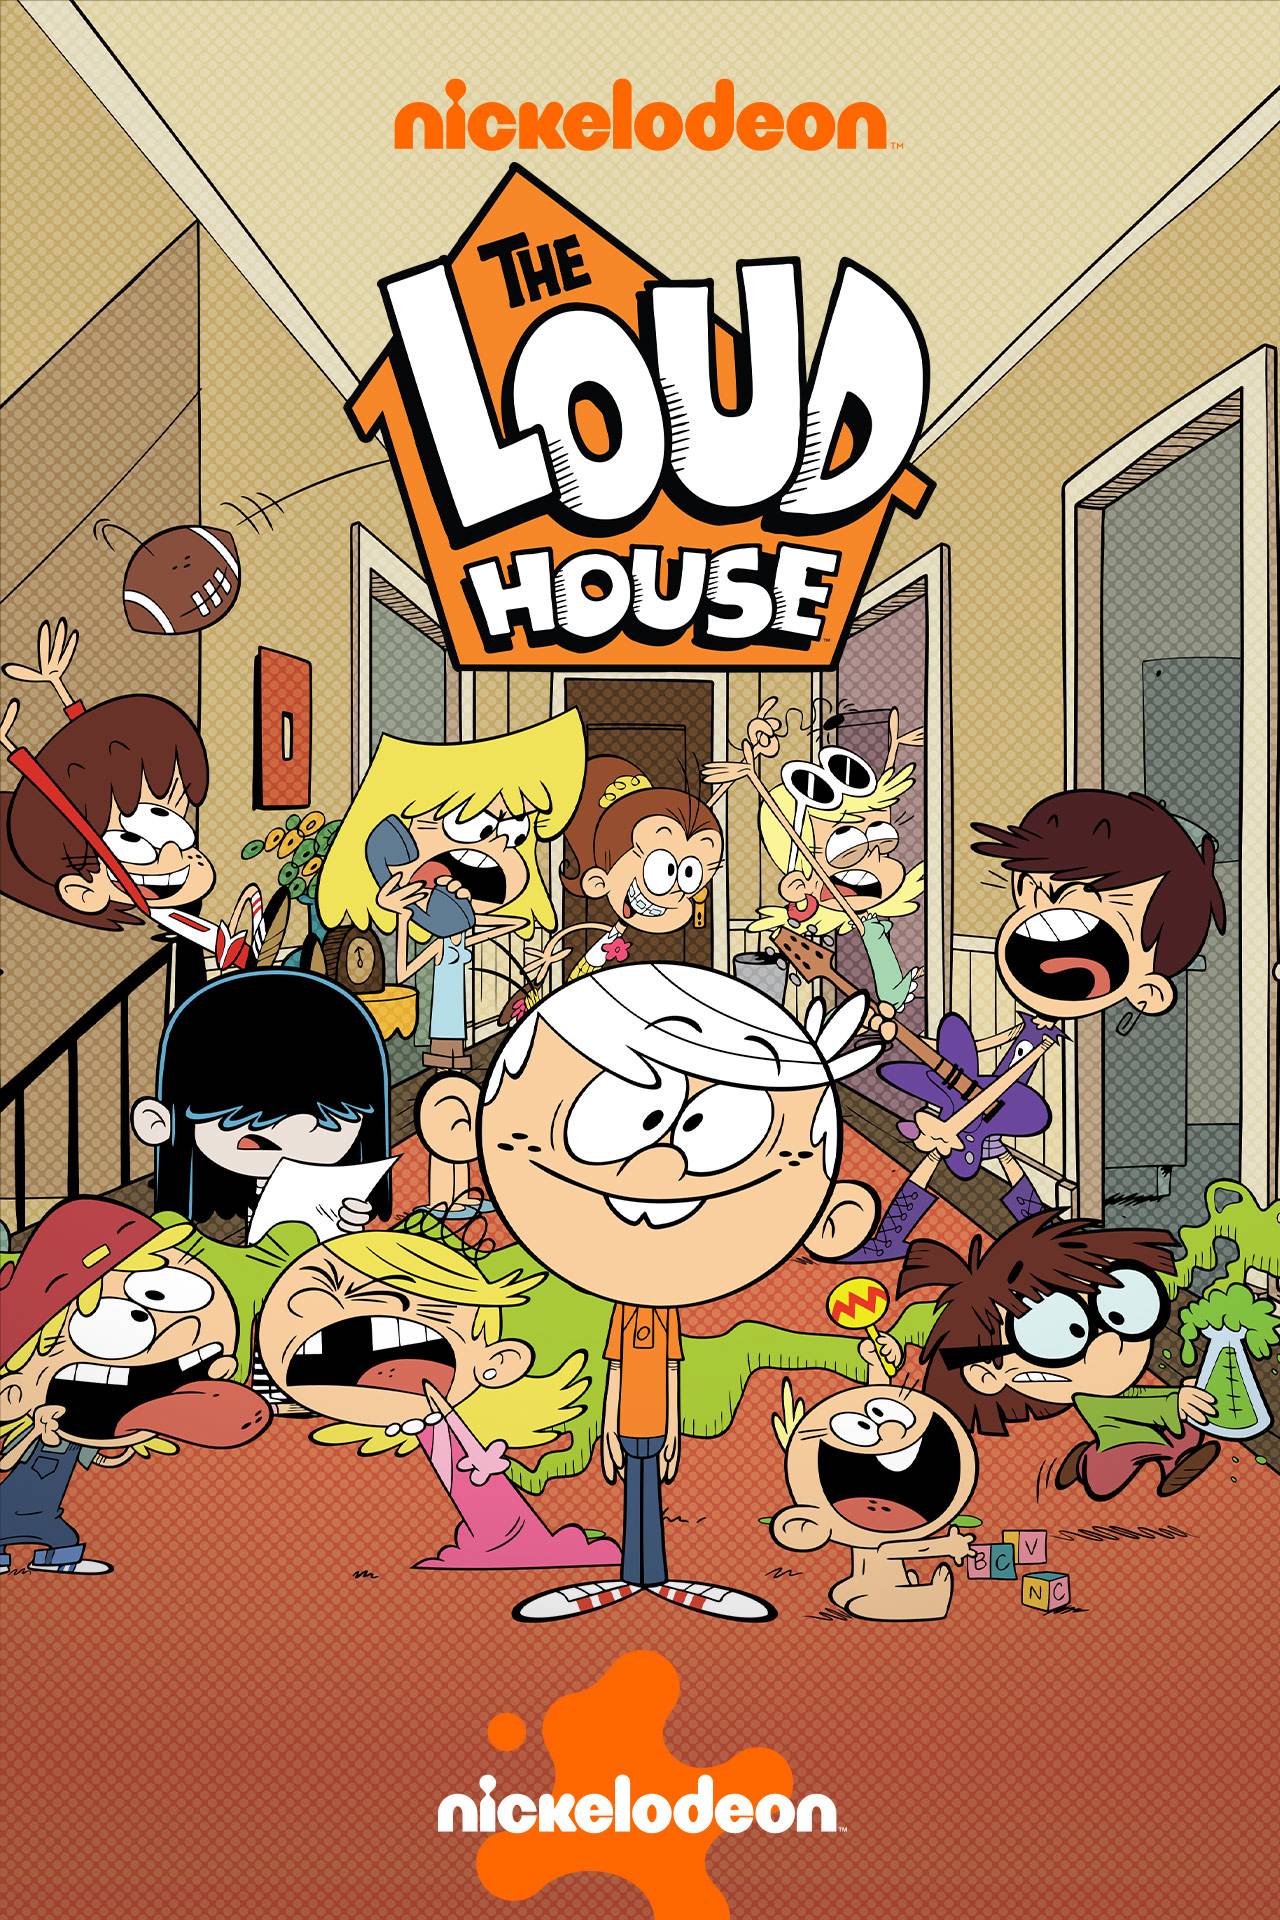 Loud House' Live-Action Series Set At Nickelodeon; Original Set For Season 7